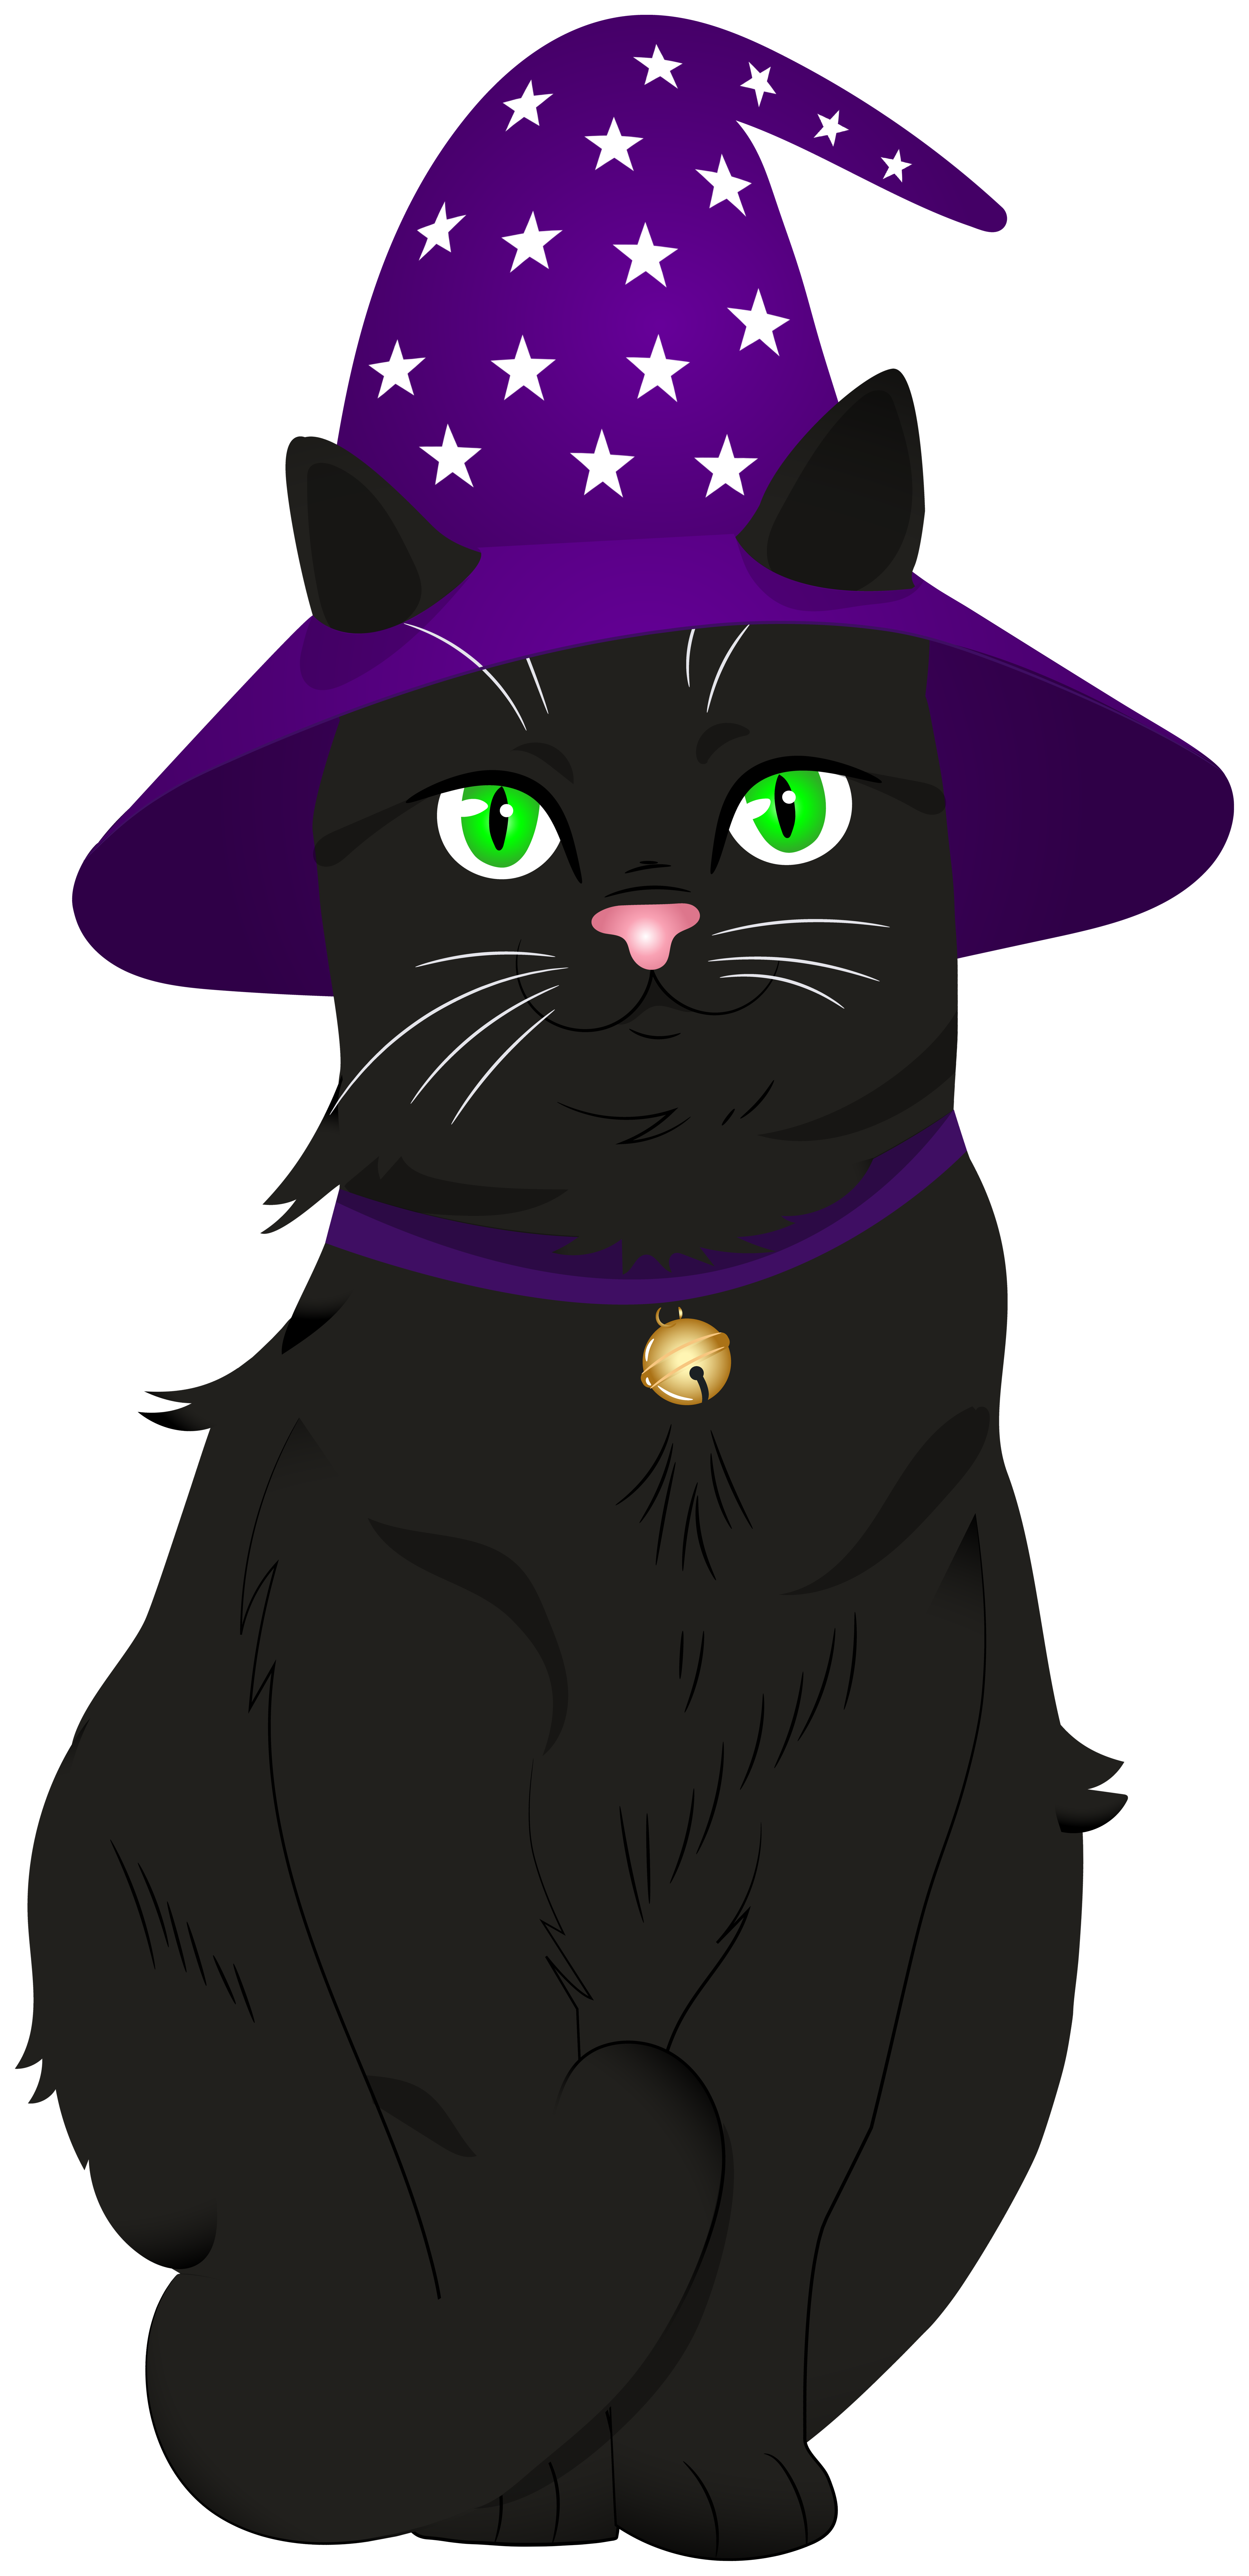 black cat clipart